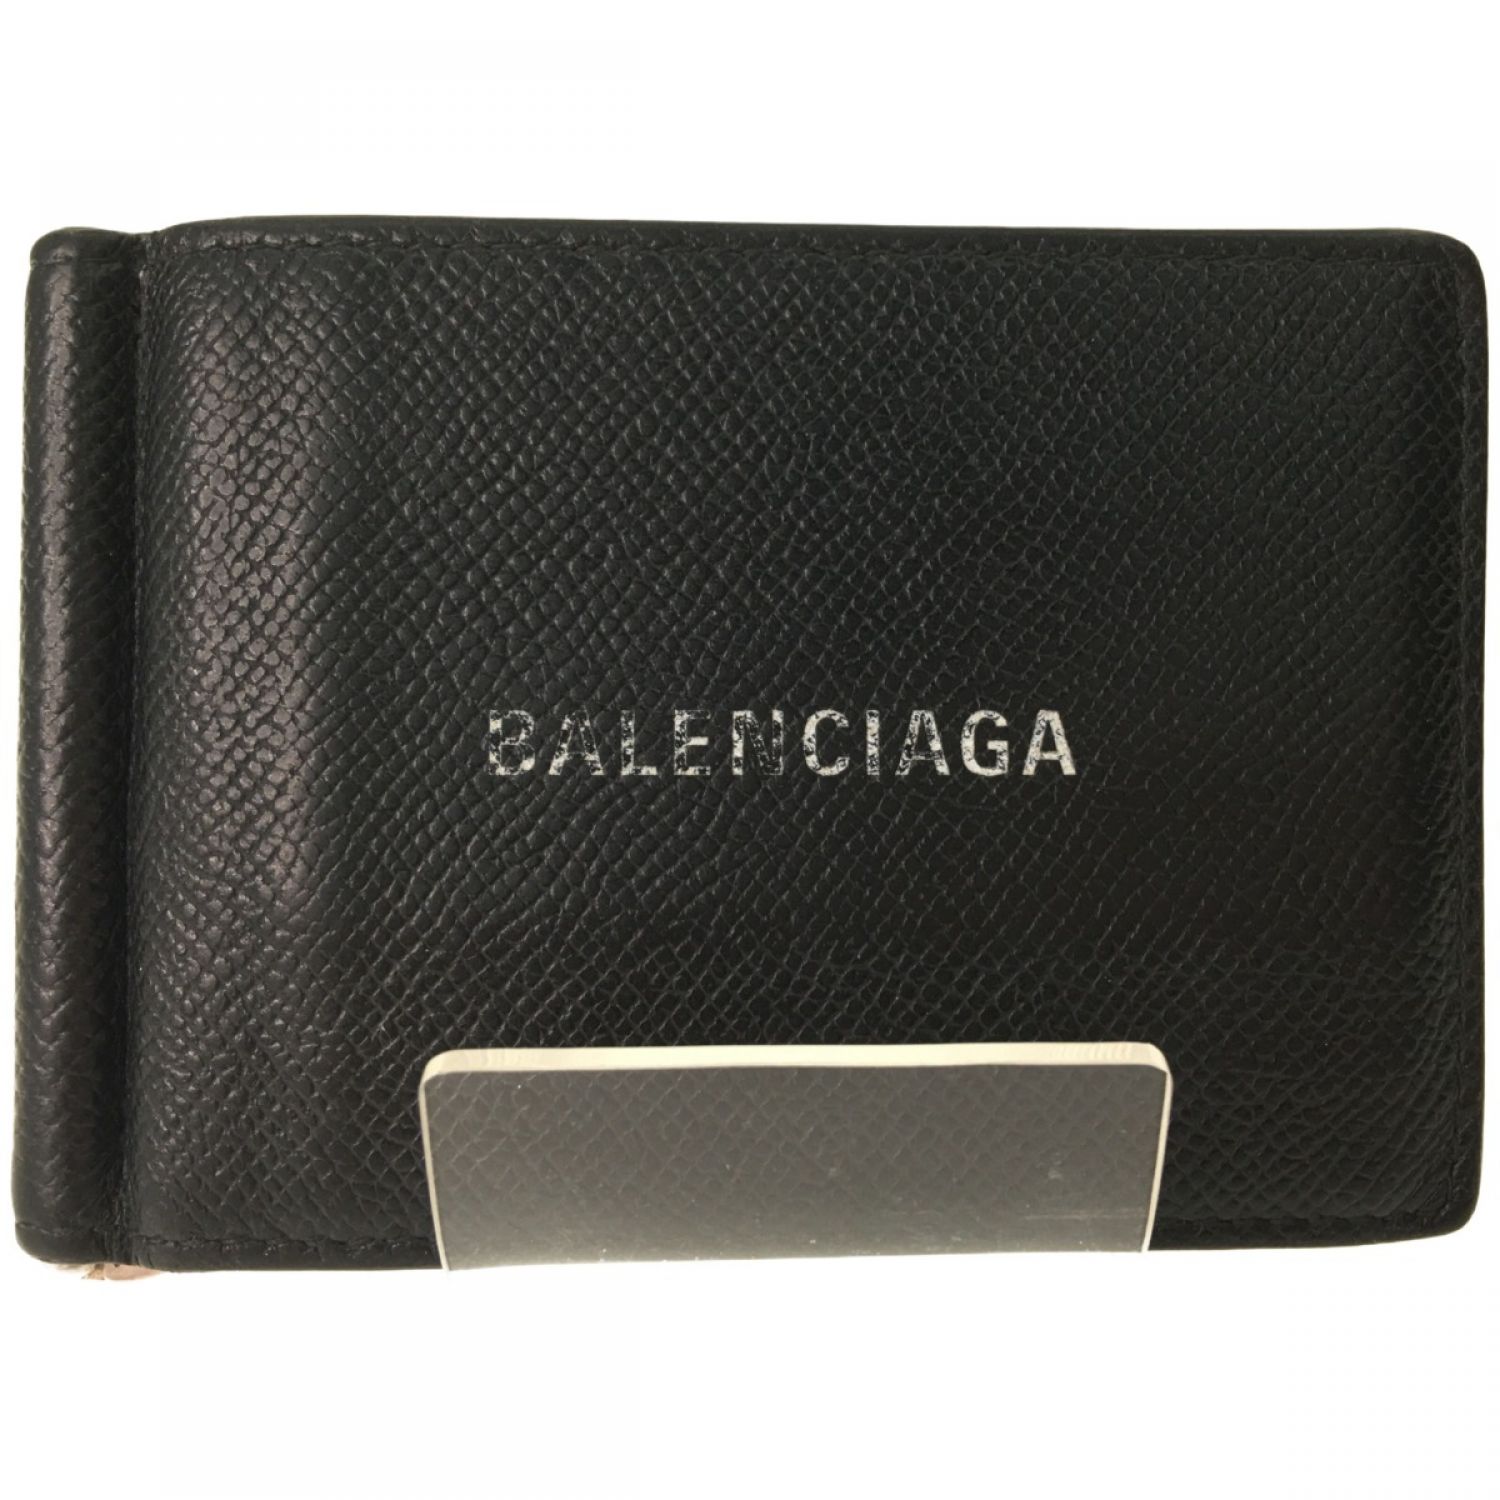 BALENCIAGA(バレンシアガ) ひび割れ加工 財布 メンズ 財布・ケース